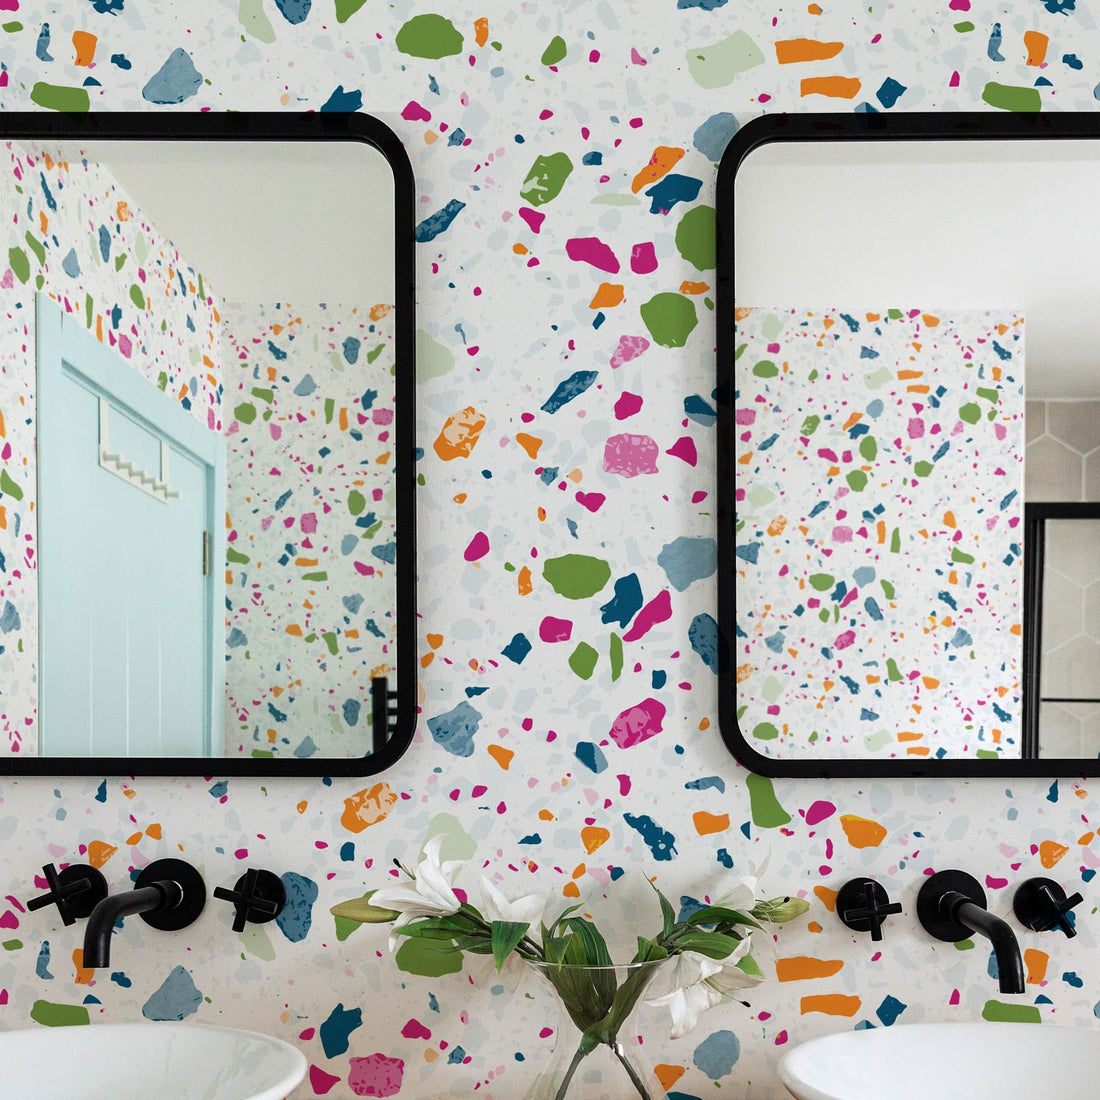 Modern kids bathroom interior with colorful terrazzo design wallpaper